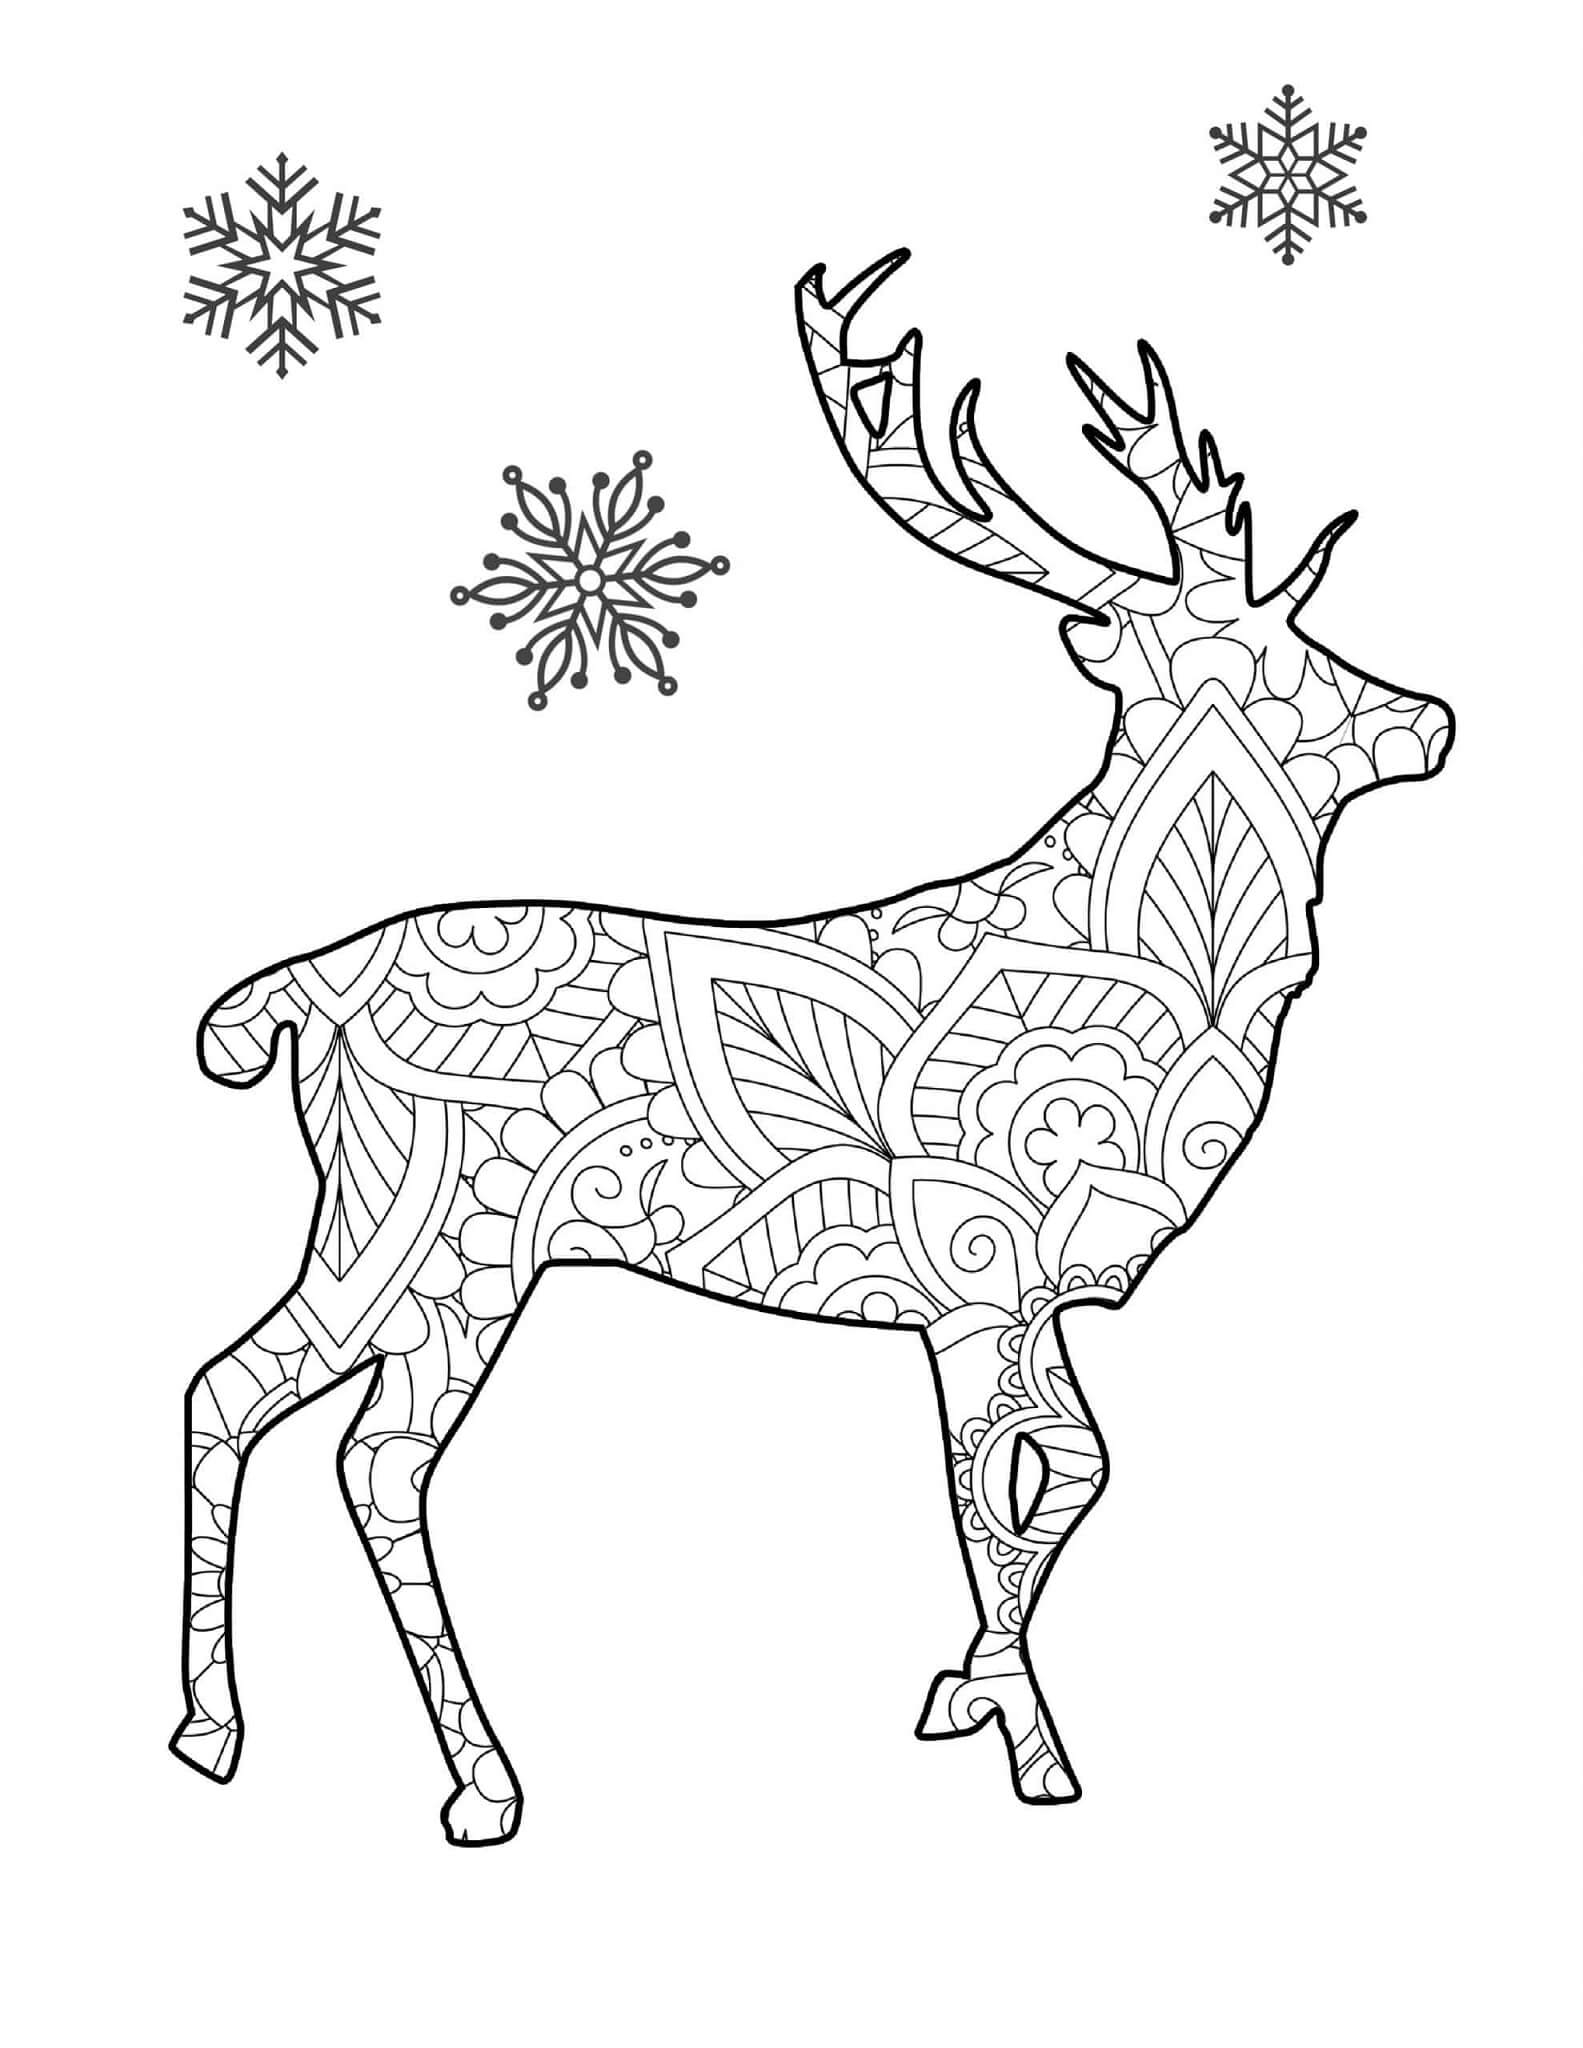 Mandala Deer With Snowflake Coloring Page Mandalas